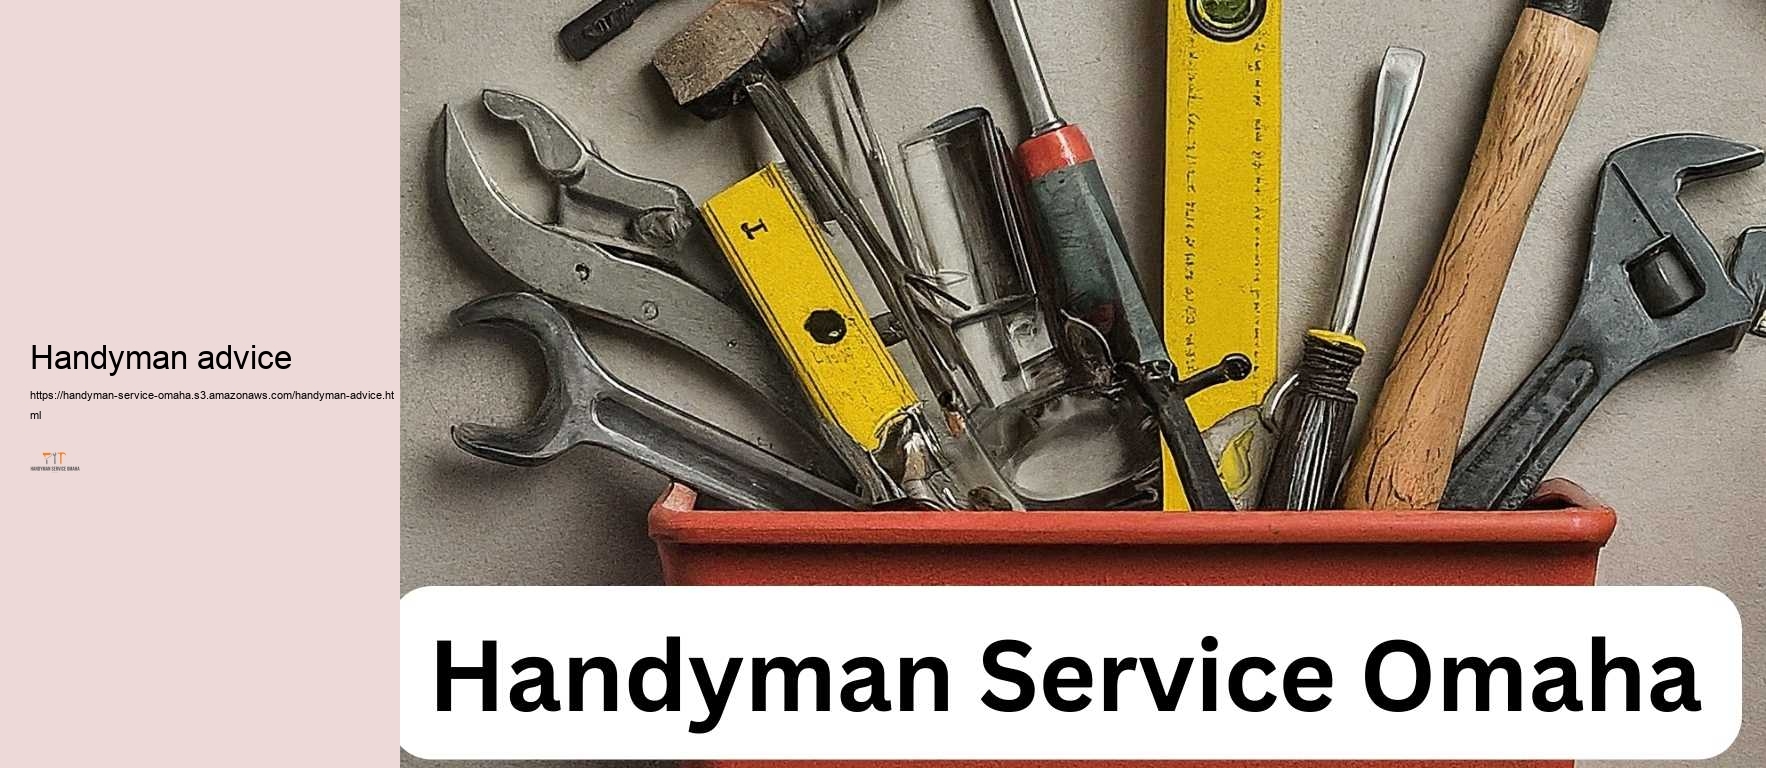 Handyman advice